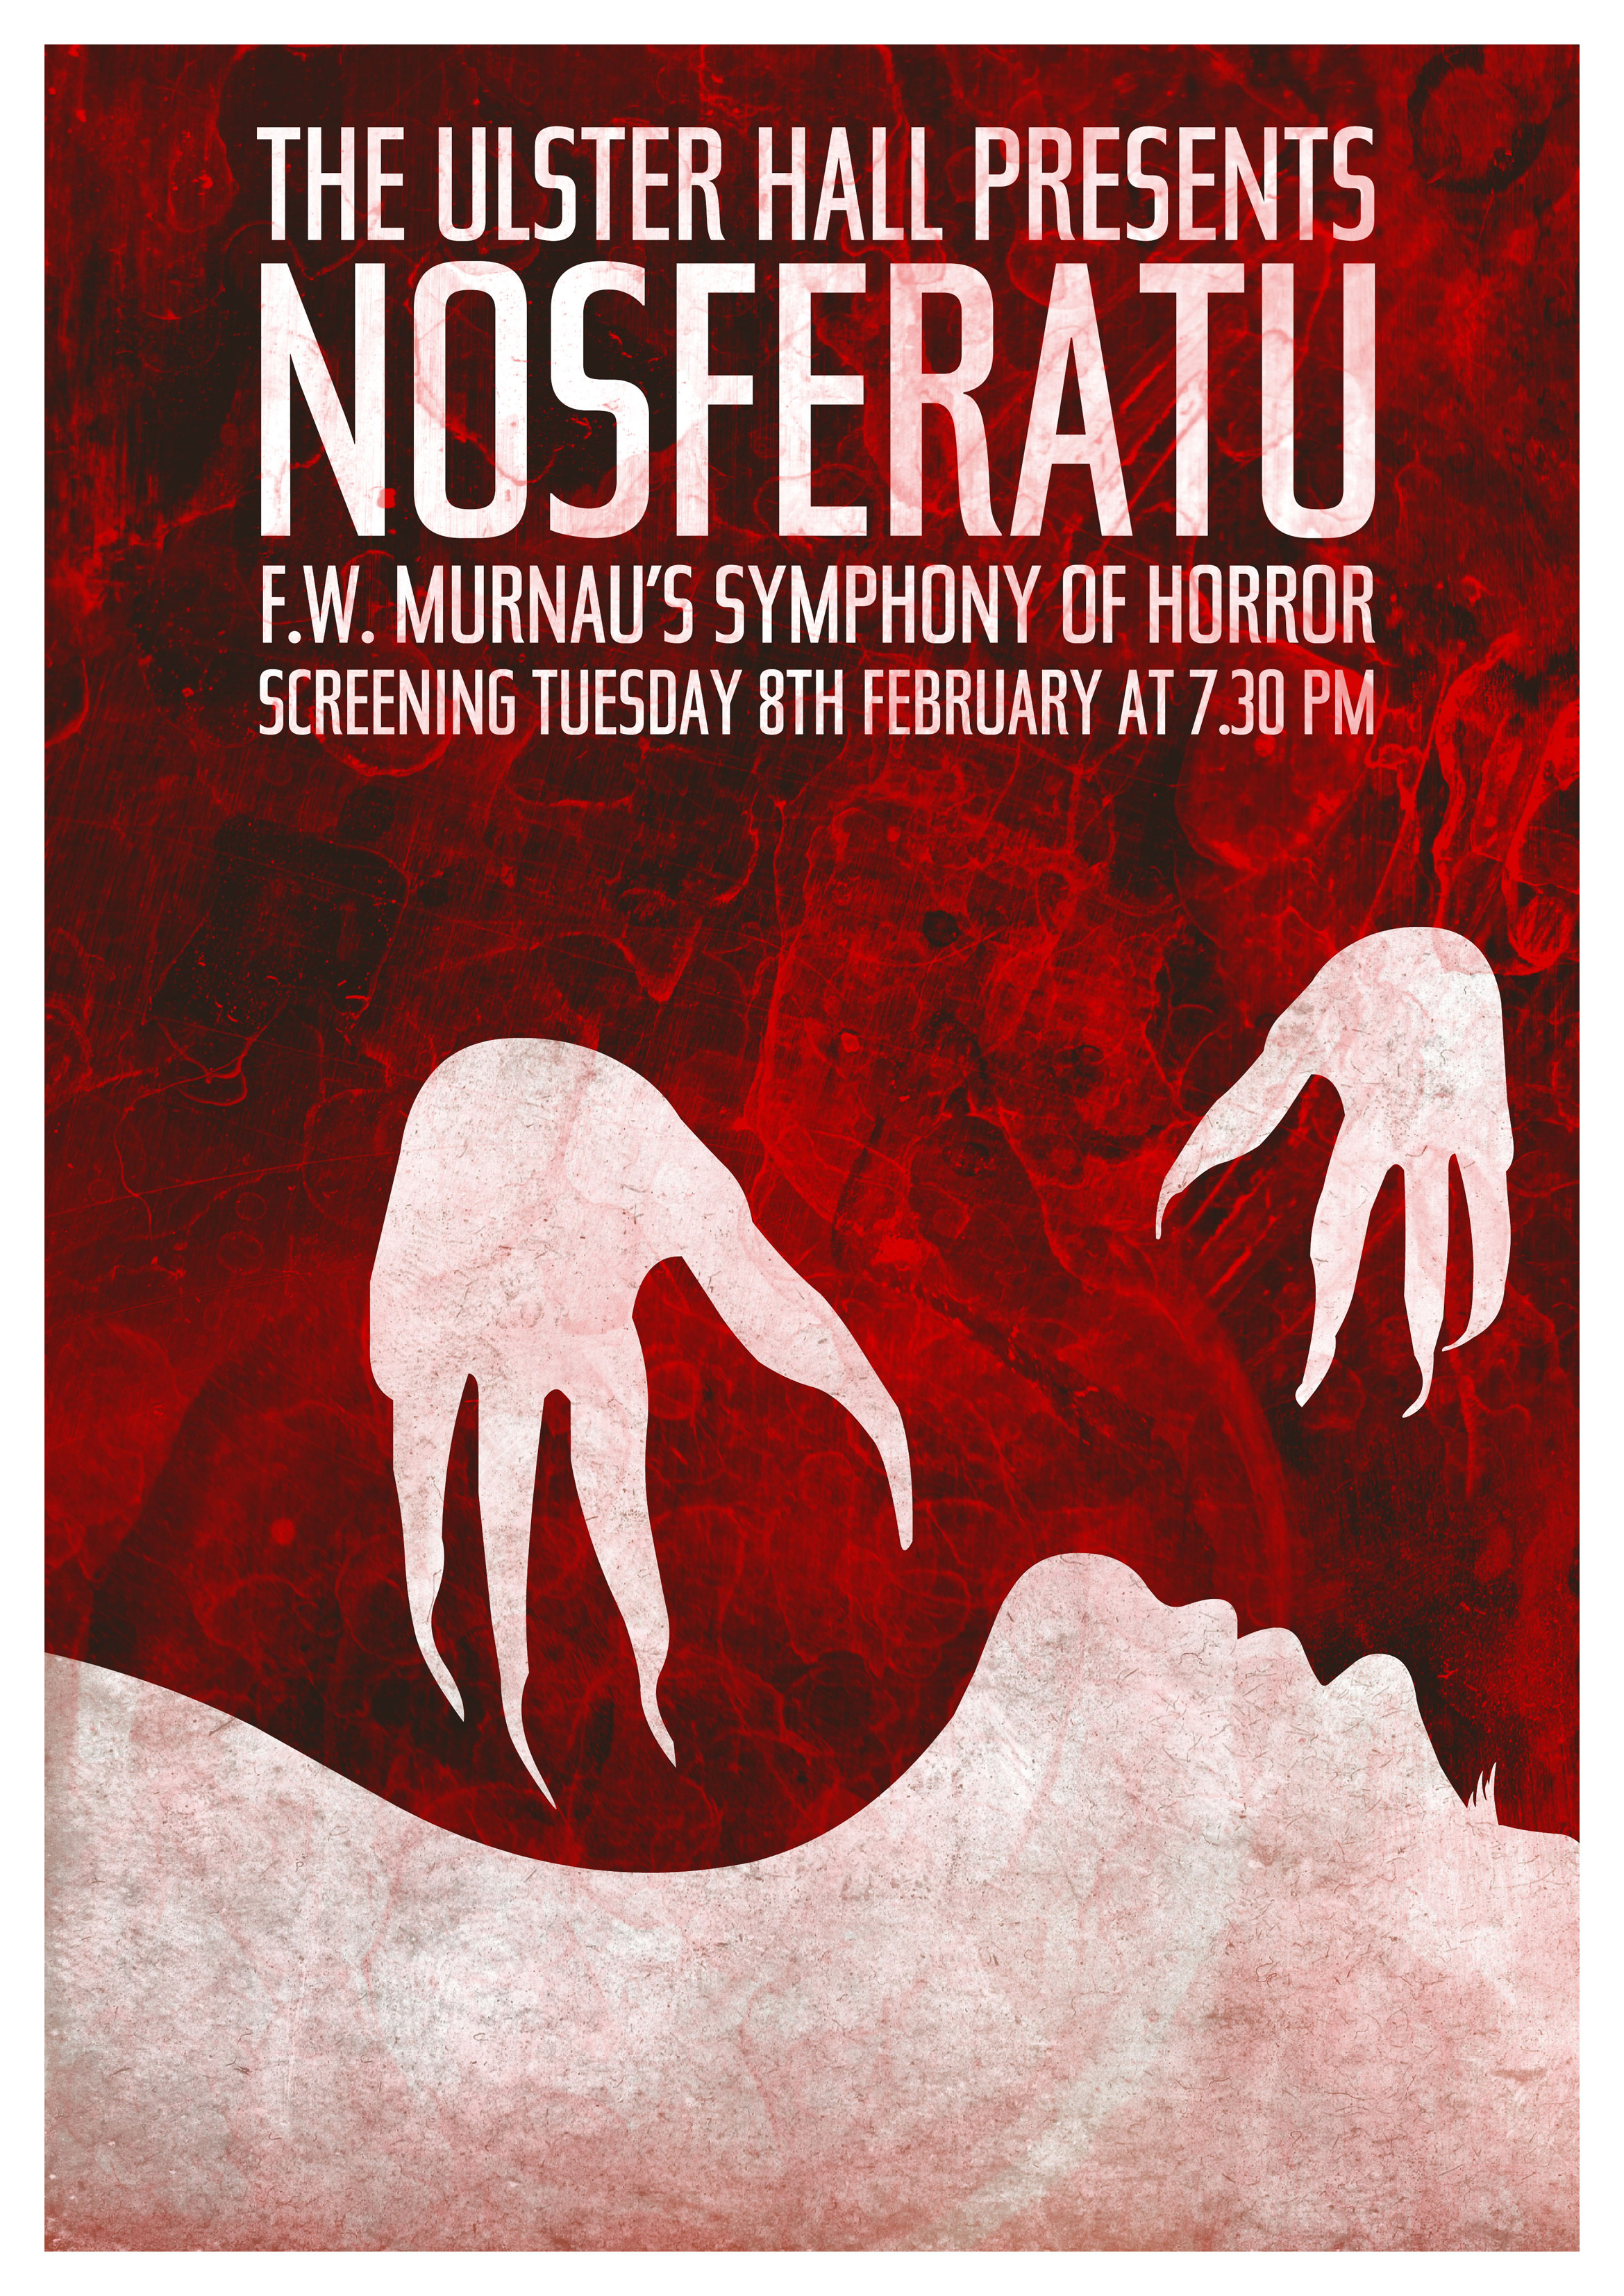 Nosferatu (1922) poster by Conor Bryce, 2011